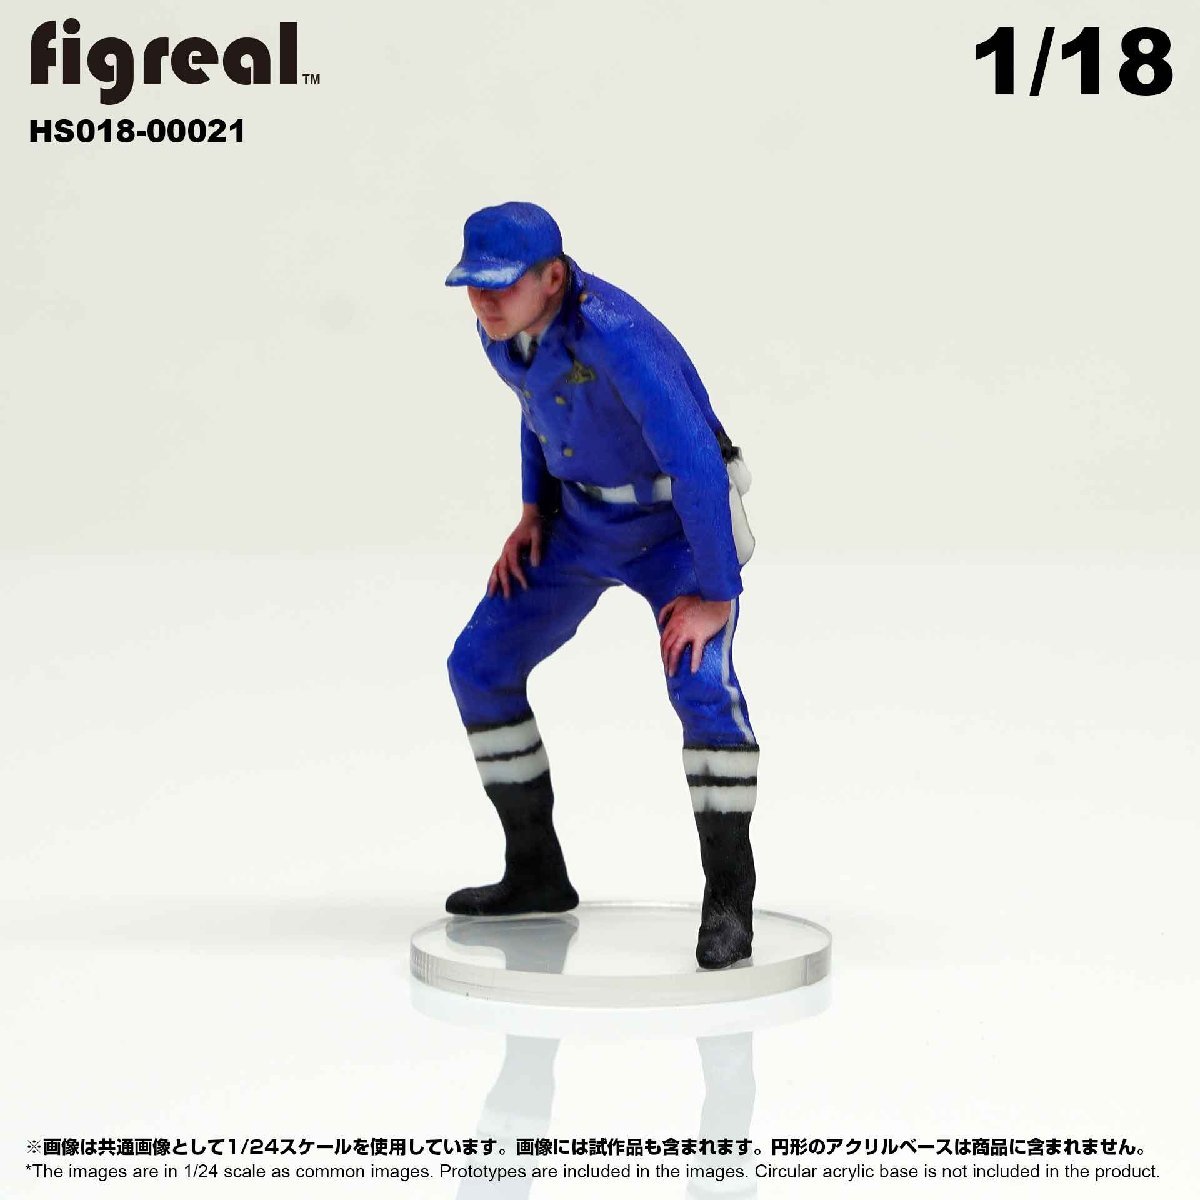 HS018-00021 figreal 日本交通機動隊 1/18 高精細フィギュア_画像3